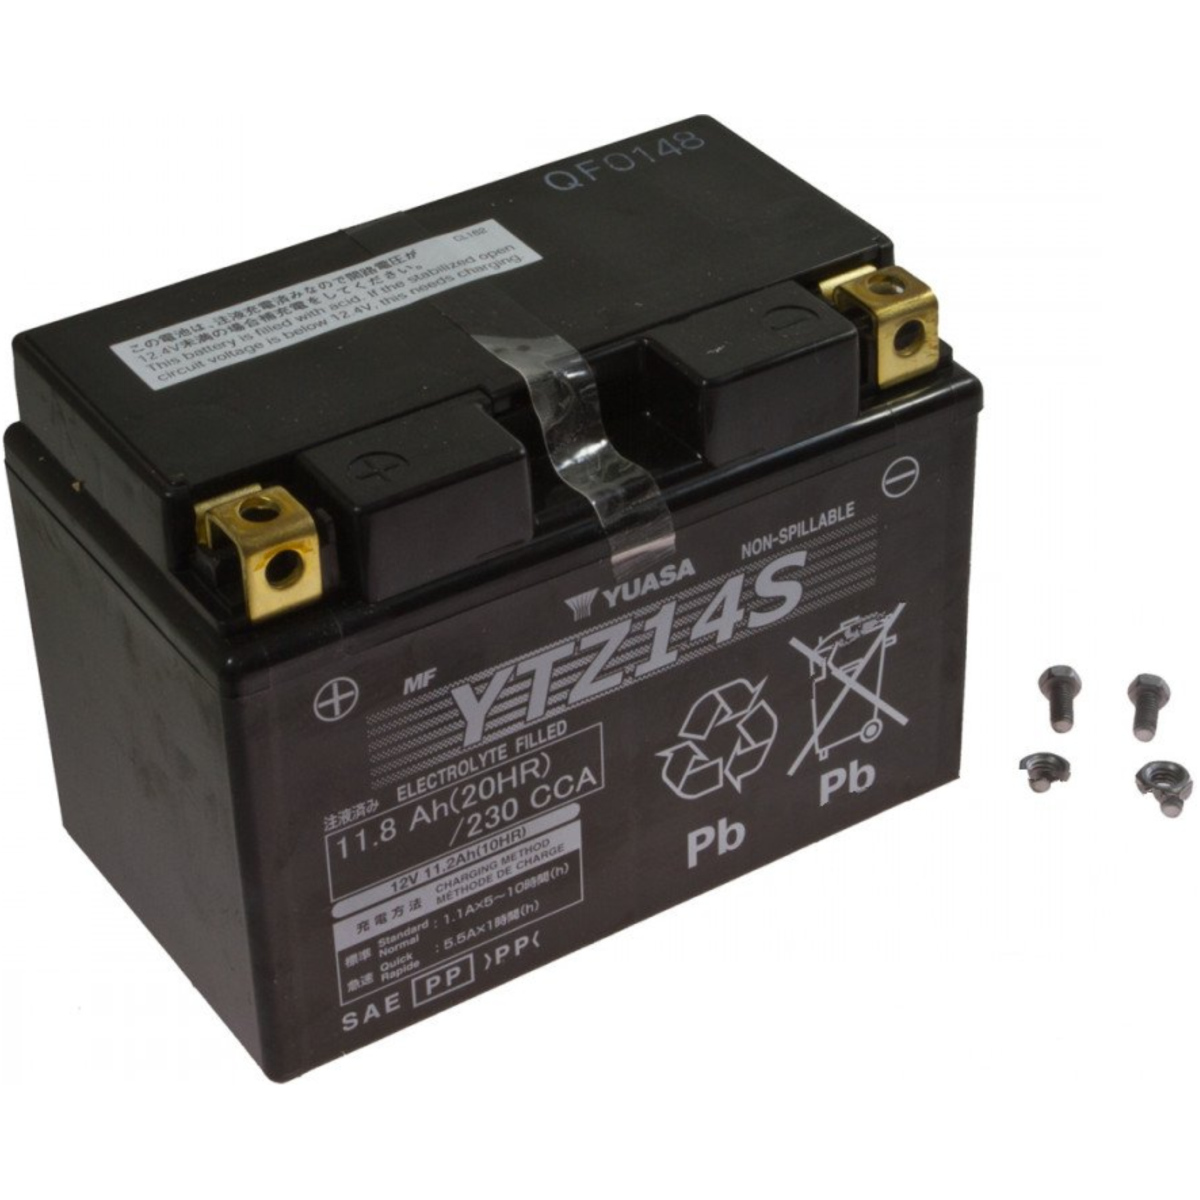 Yuasa ytz14s(wc) motorradbatterie ytz14s wet von Yuasa